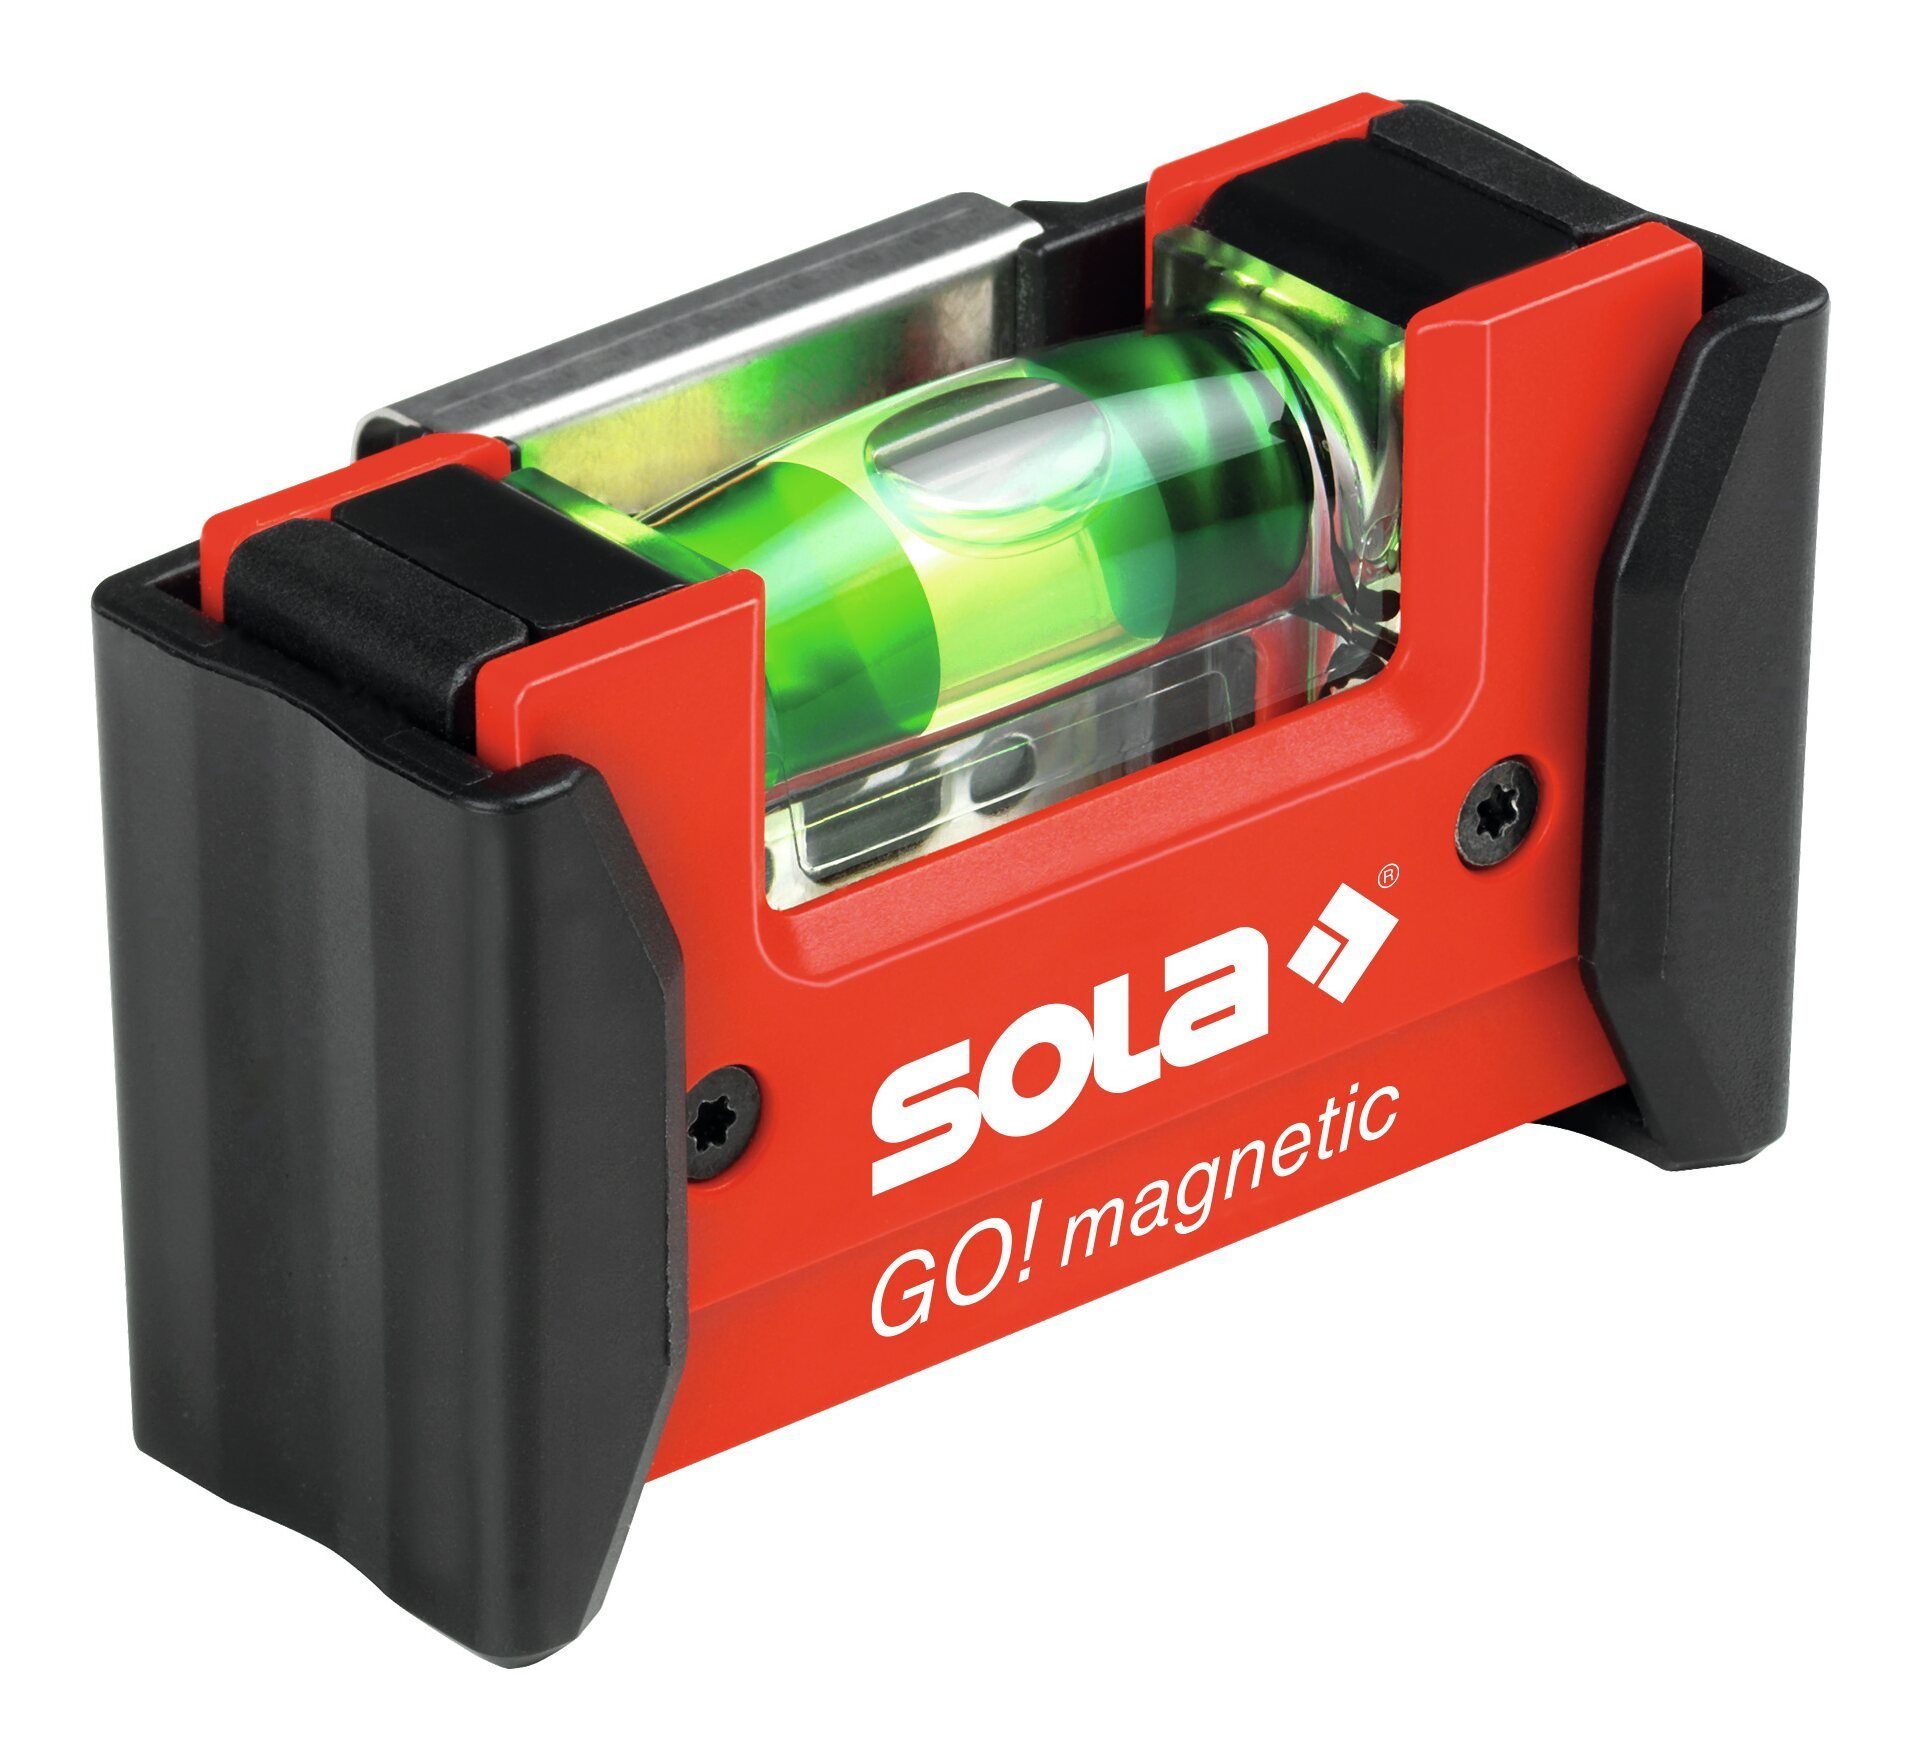 SOLA Magnet-Mini Clip 7,5 Wasserwaage, Go Magnet cm